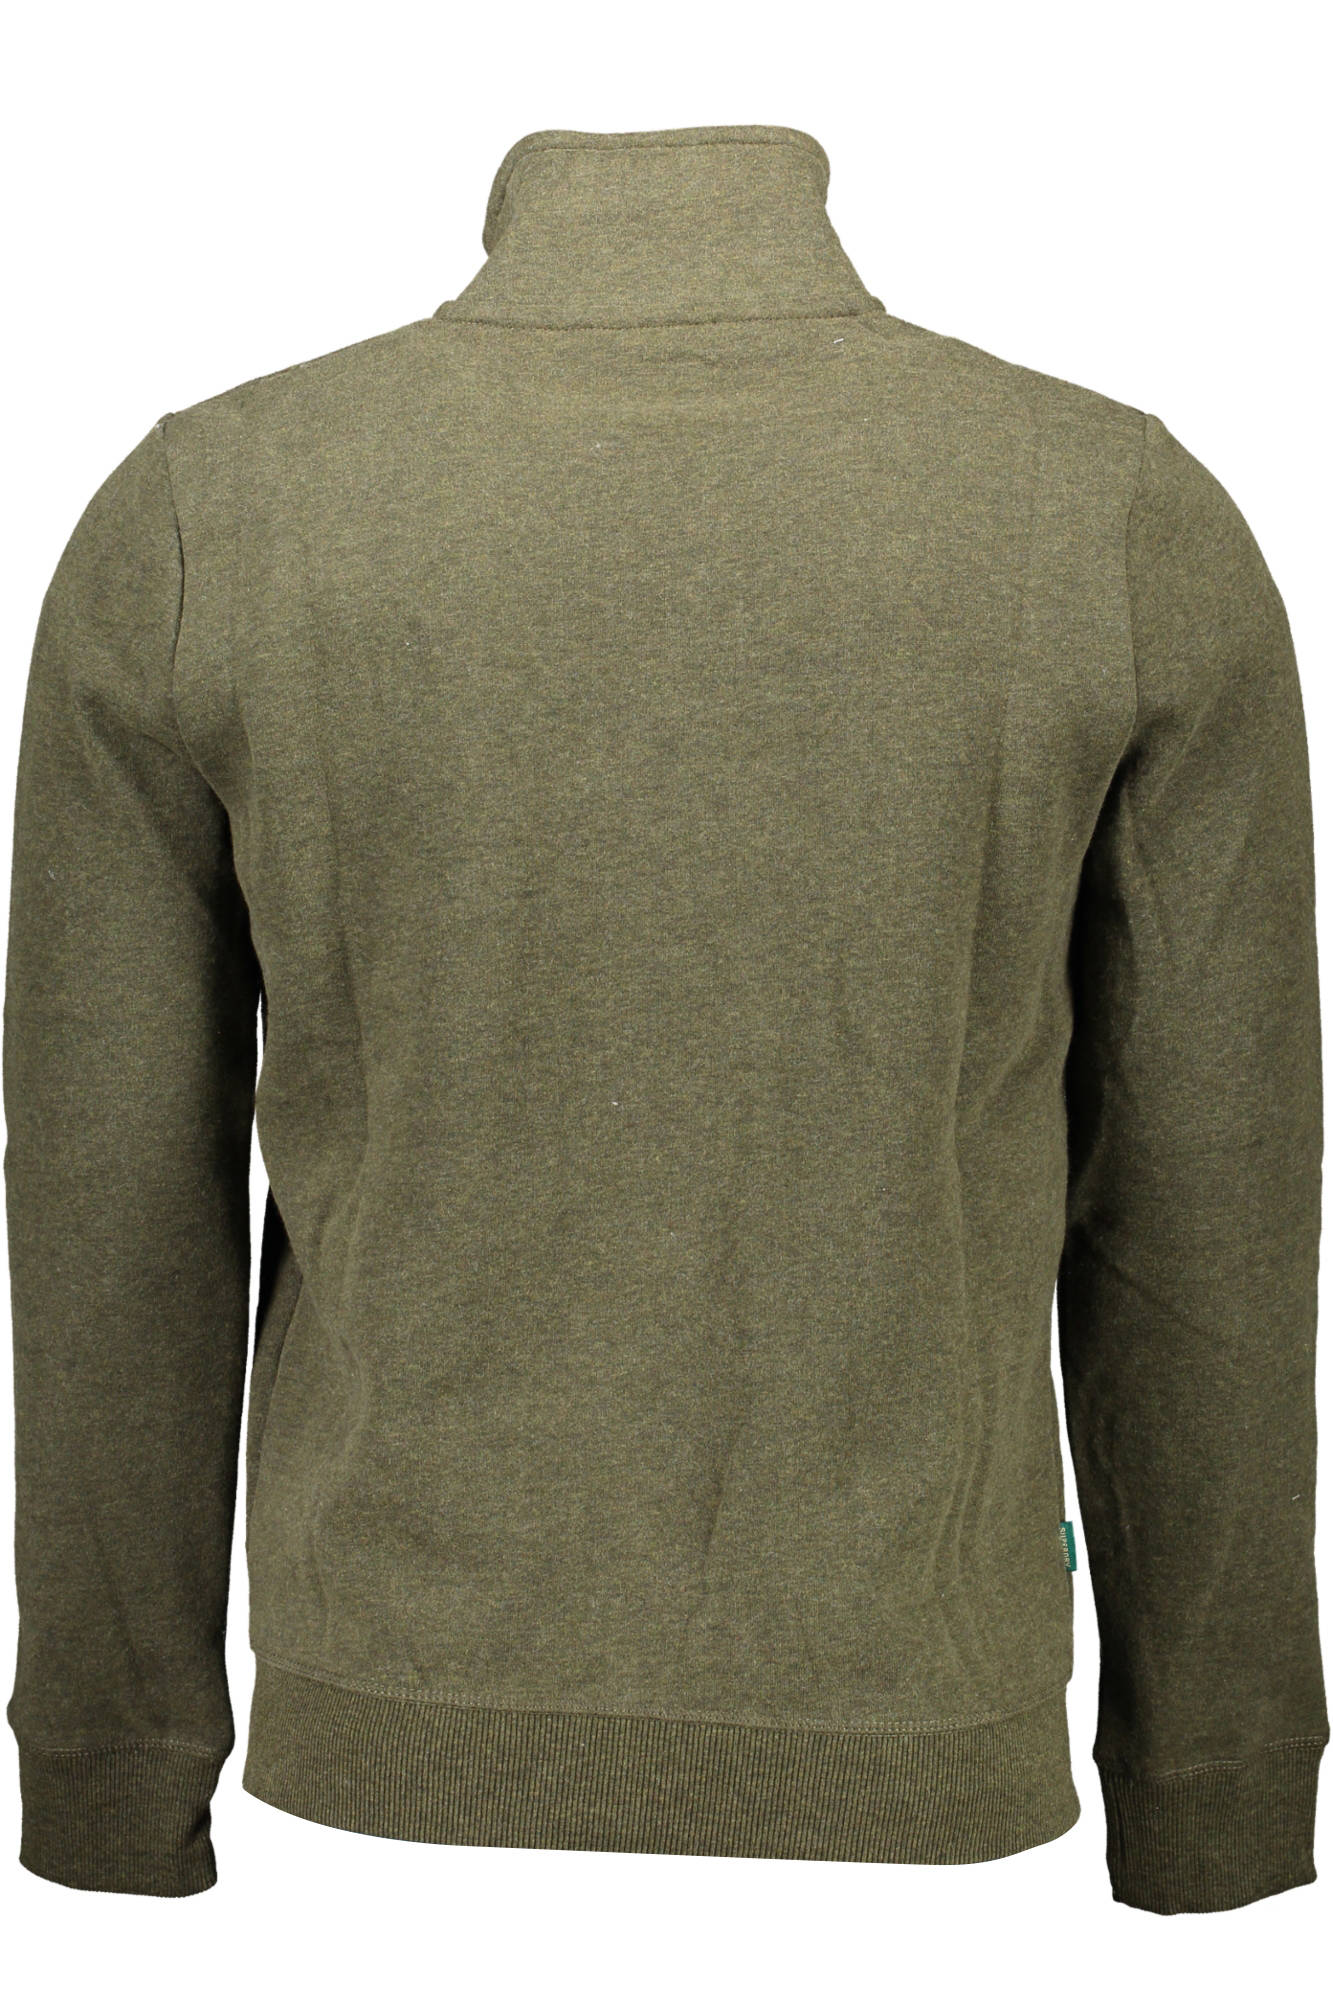 Superdry Green Sweater - Fizigo